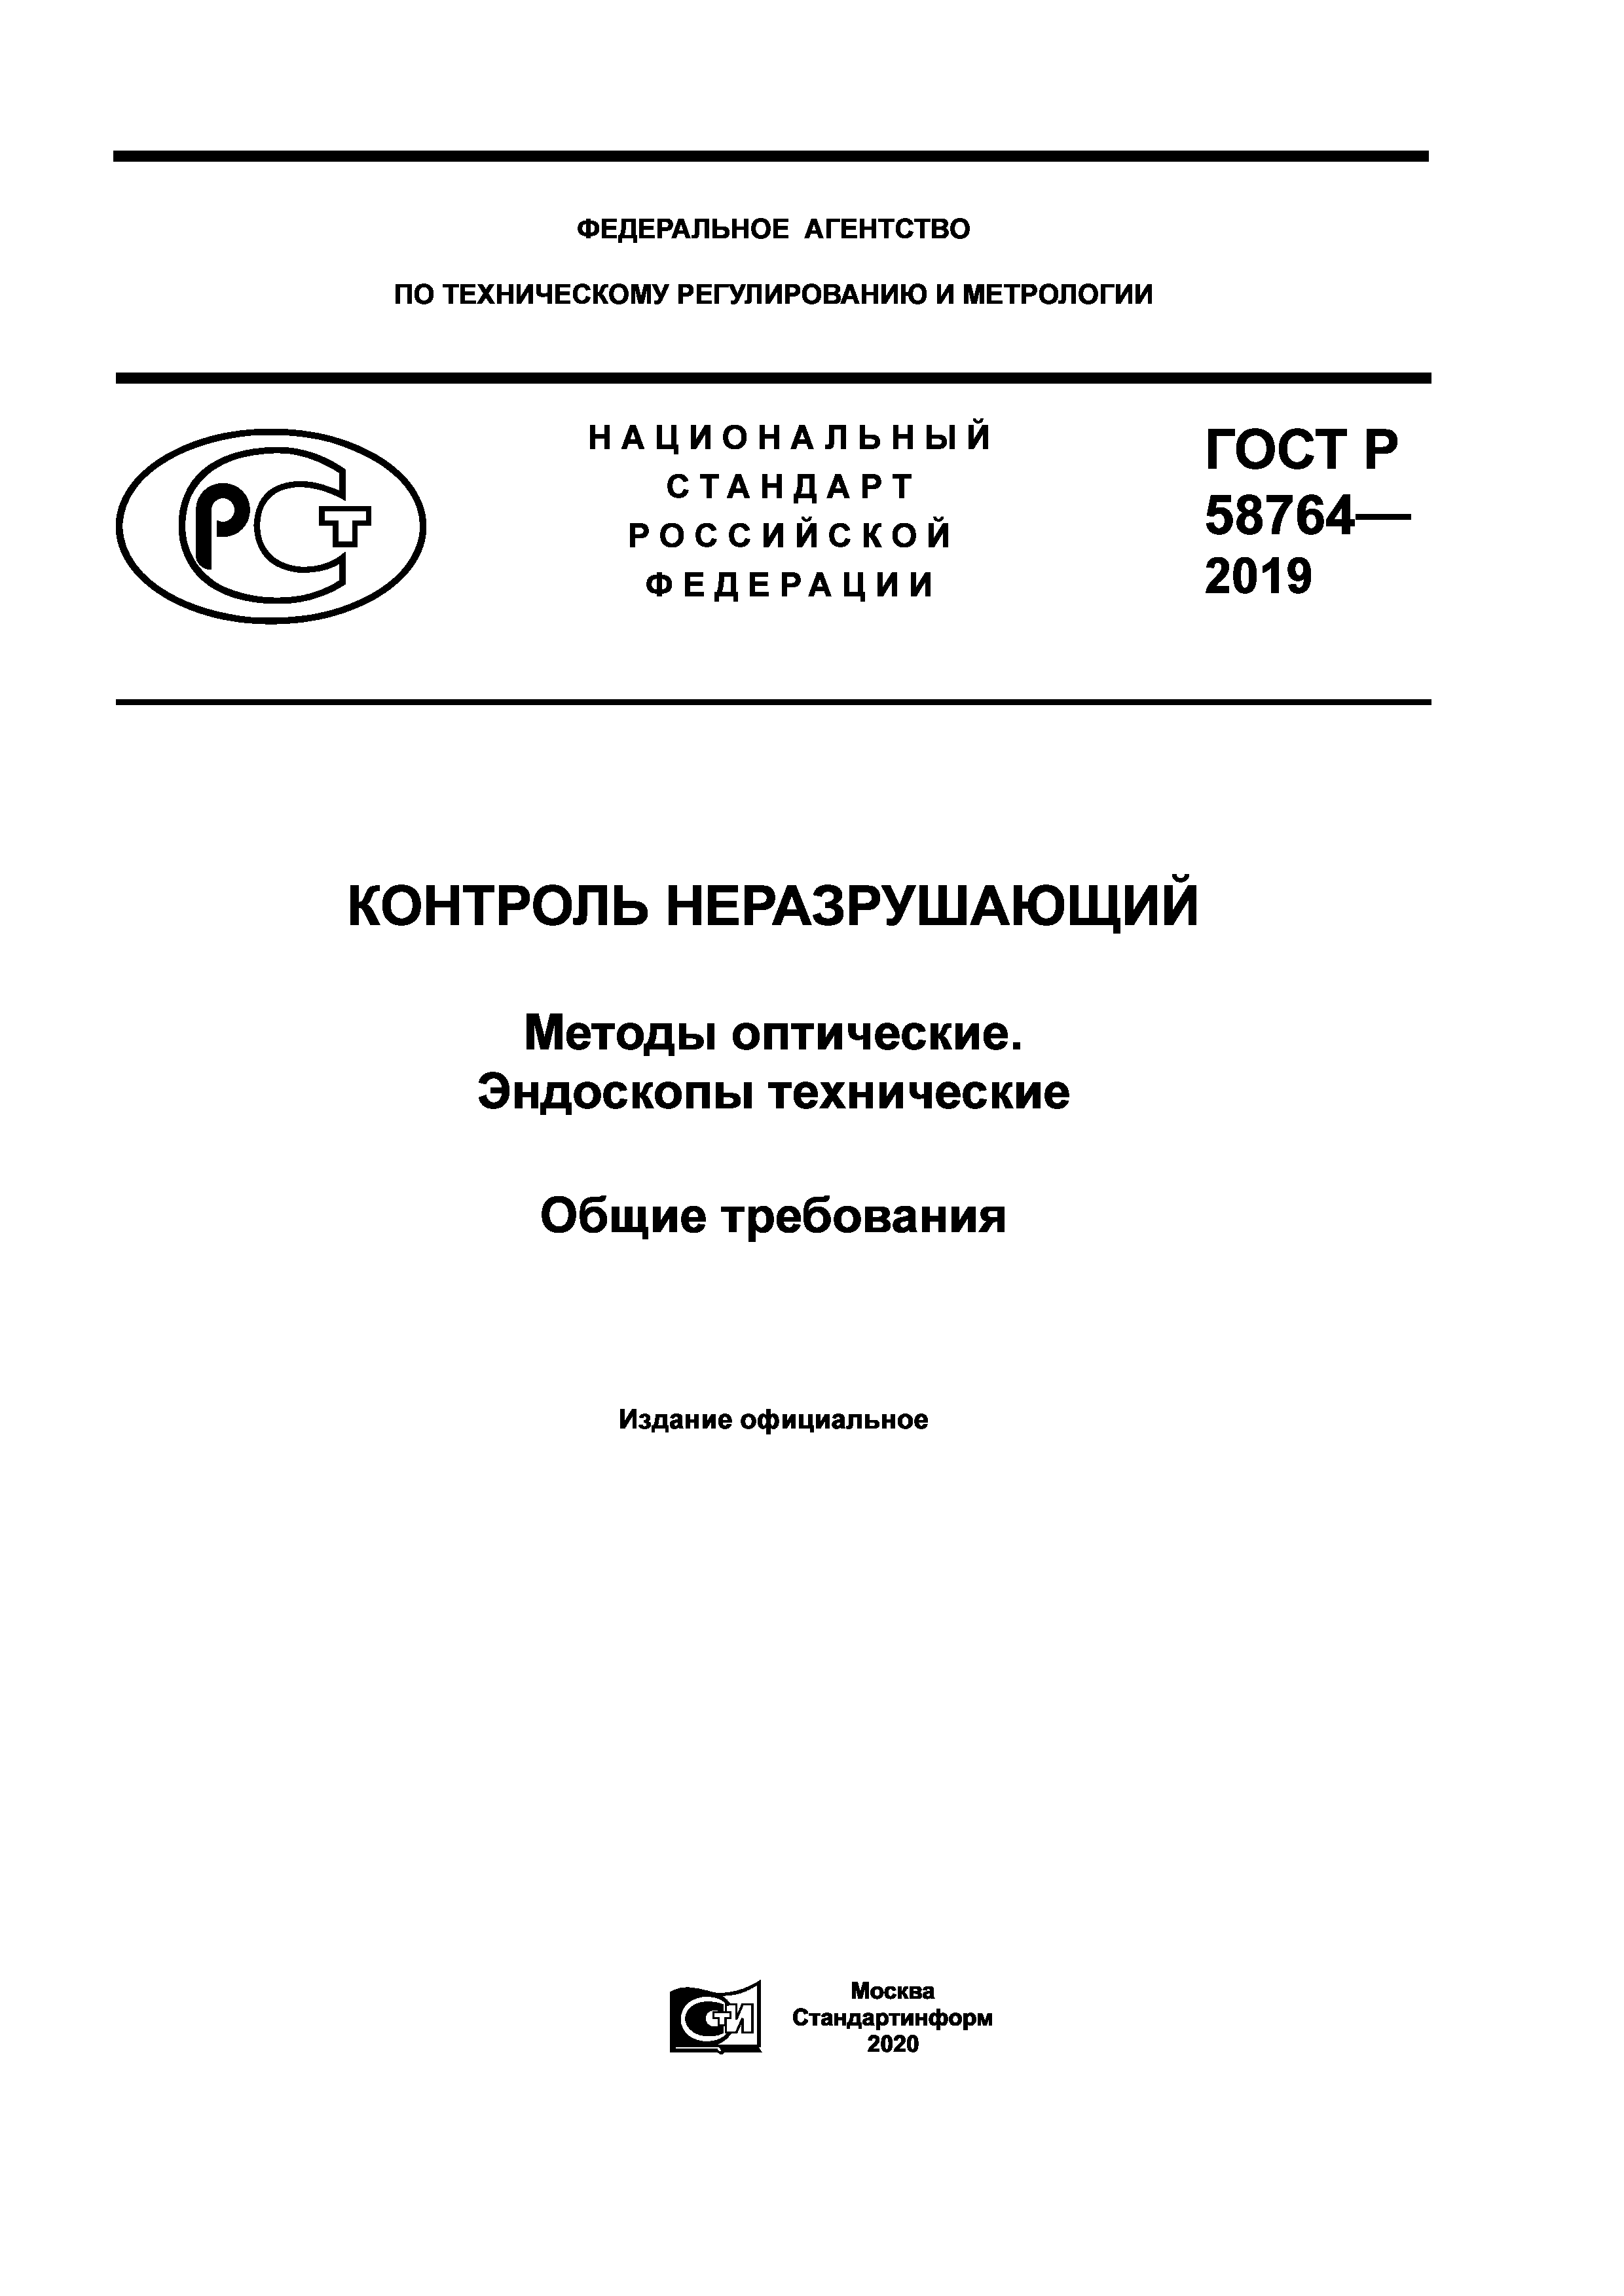 ГОСТ Р 58764-2019